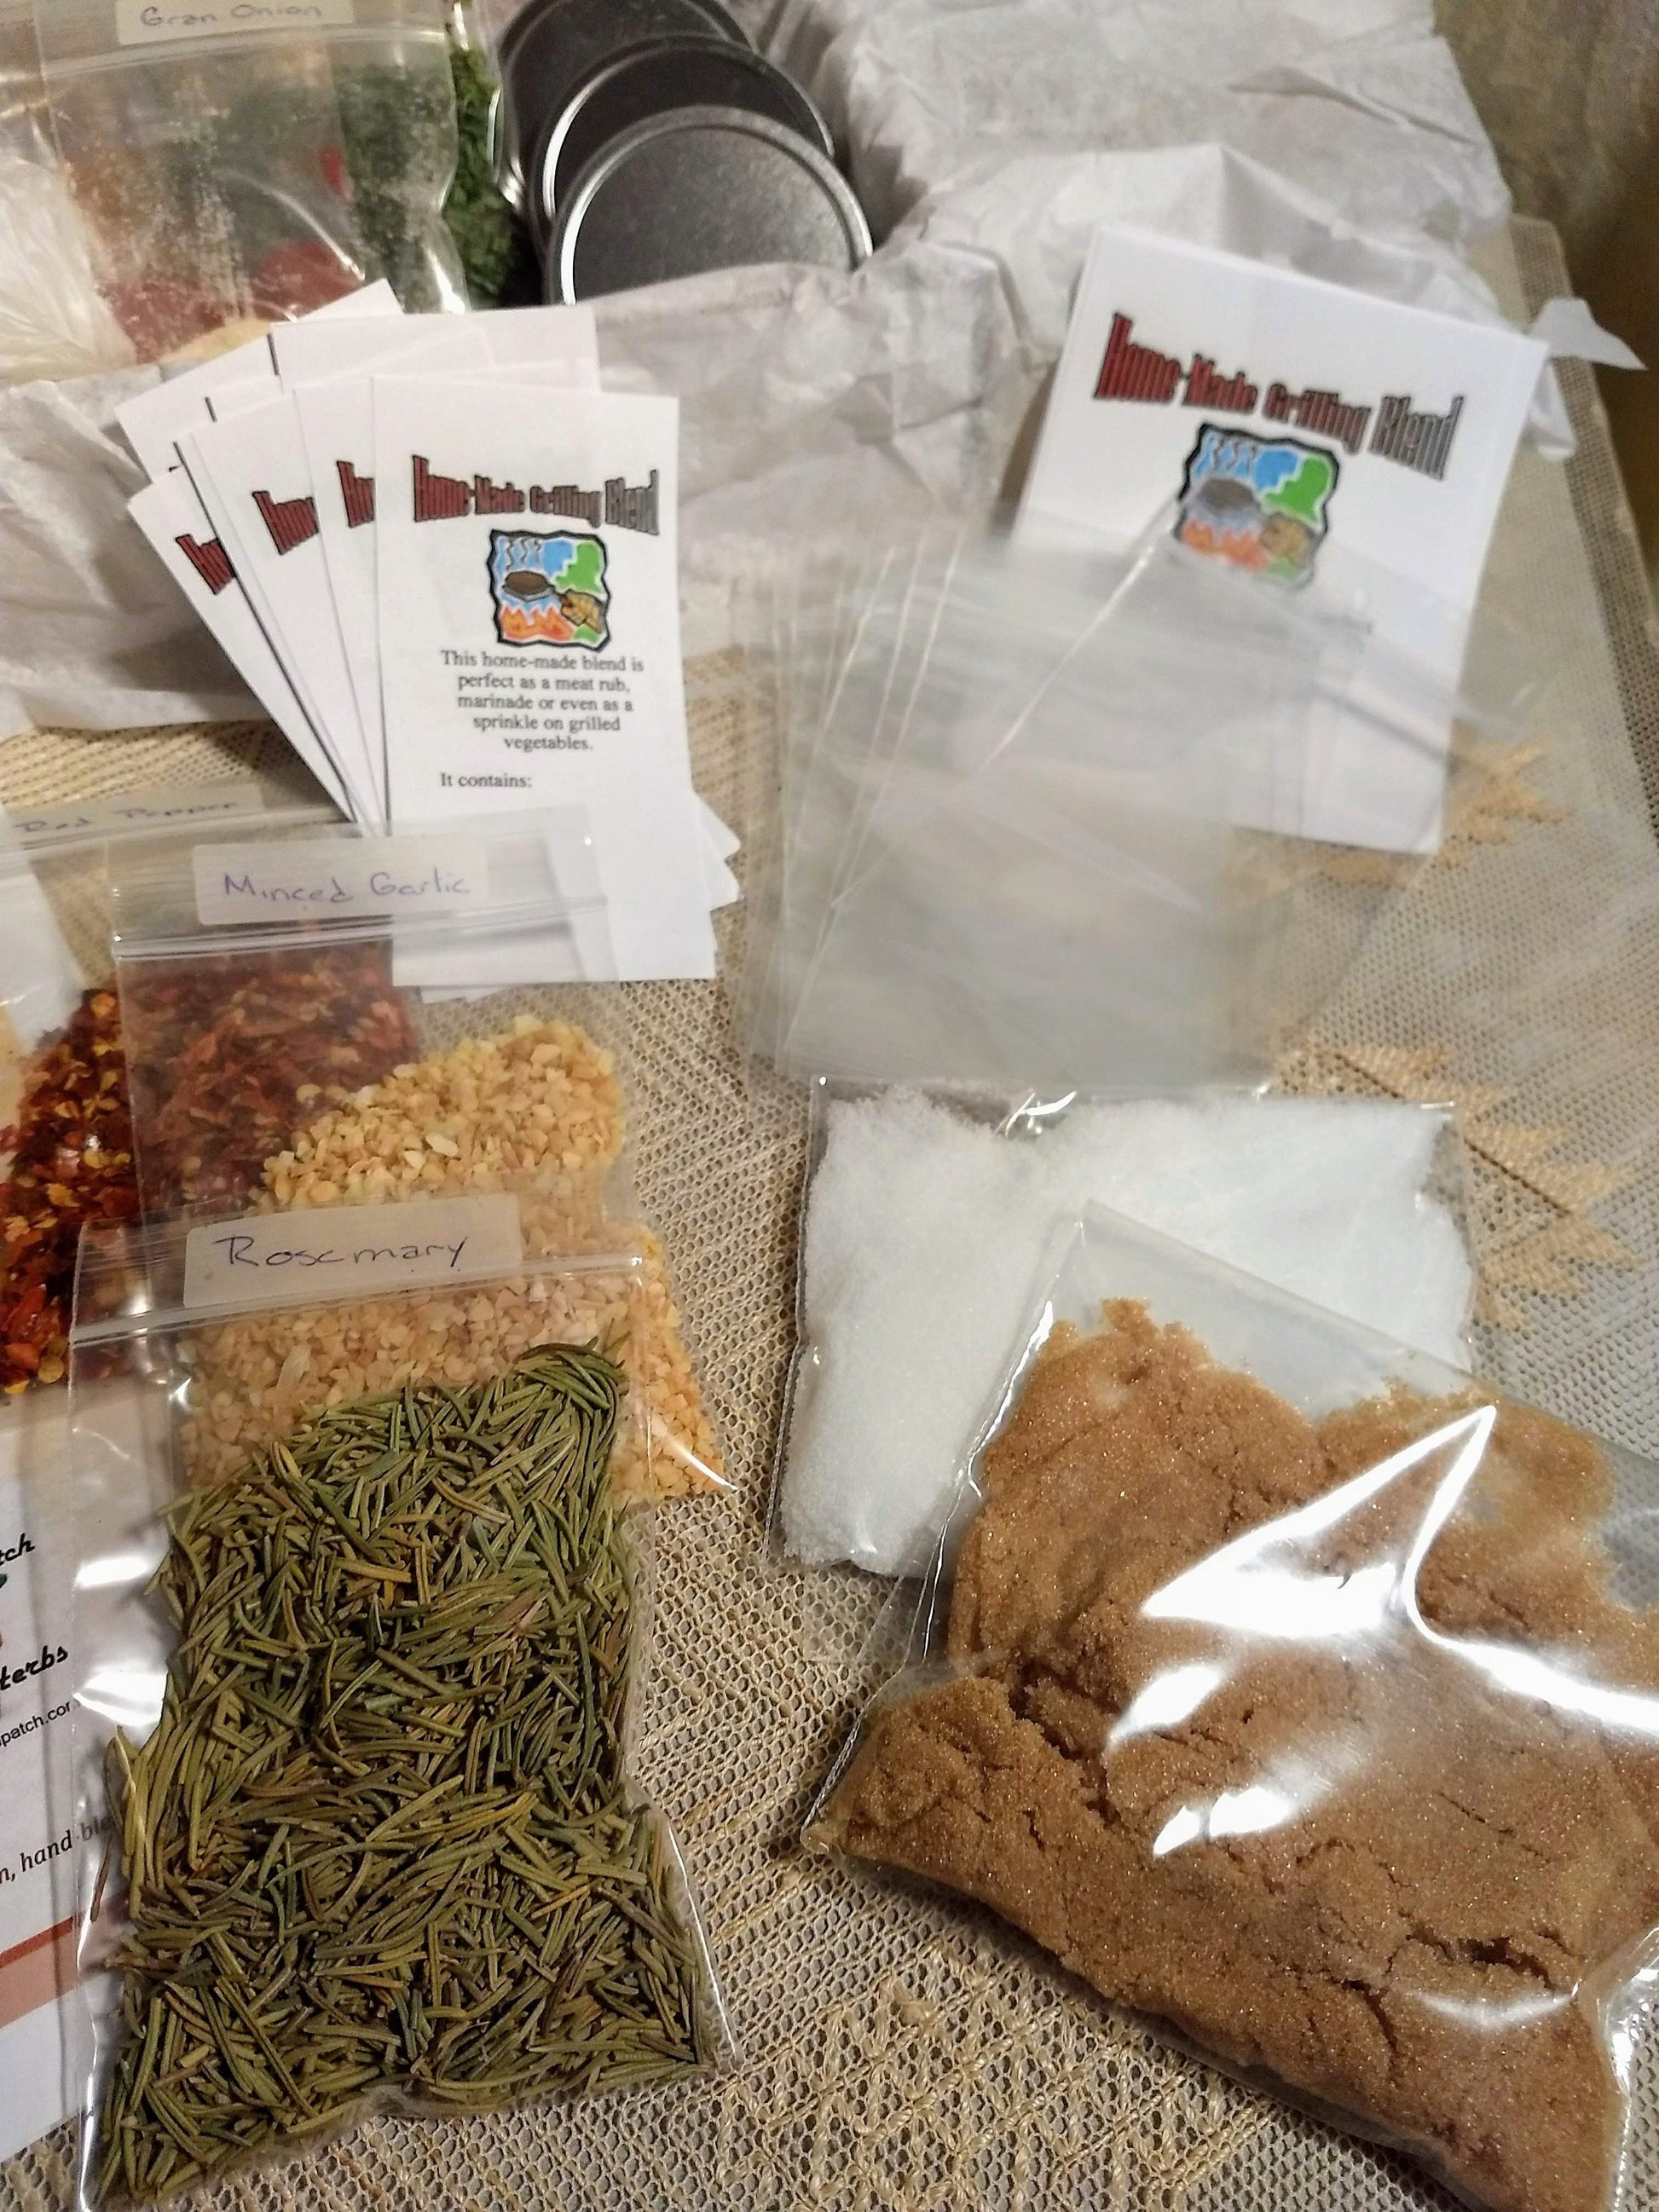 Pickle, Dust, Rub Kit Gift Pack - Creative Cajun Cooking